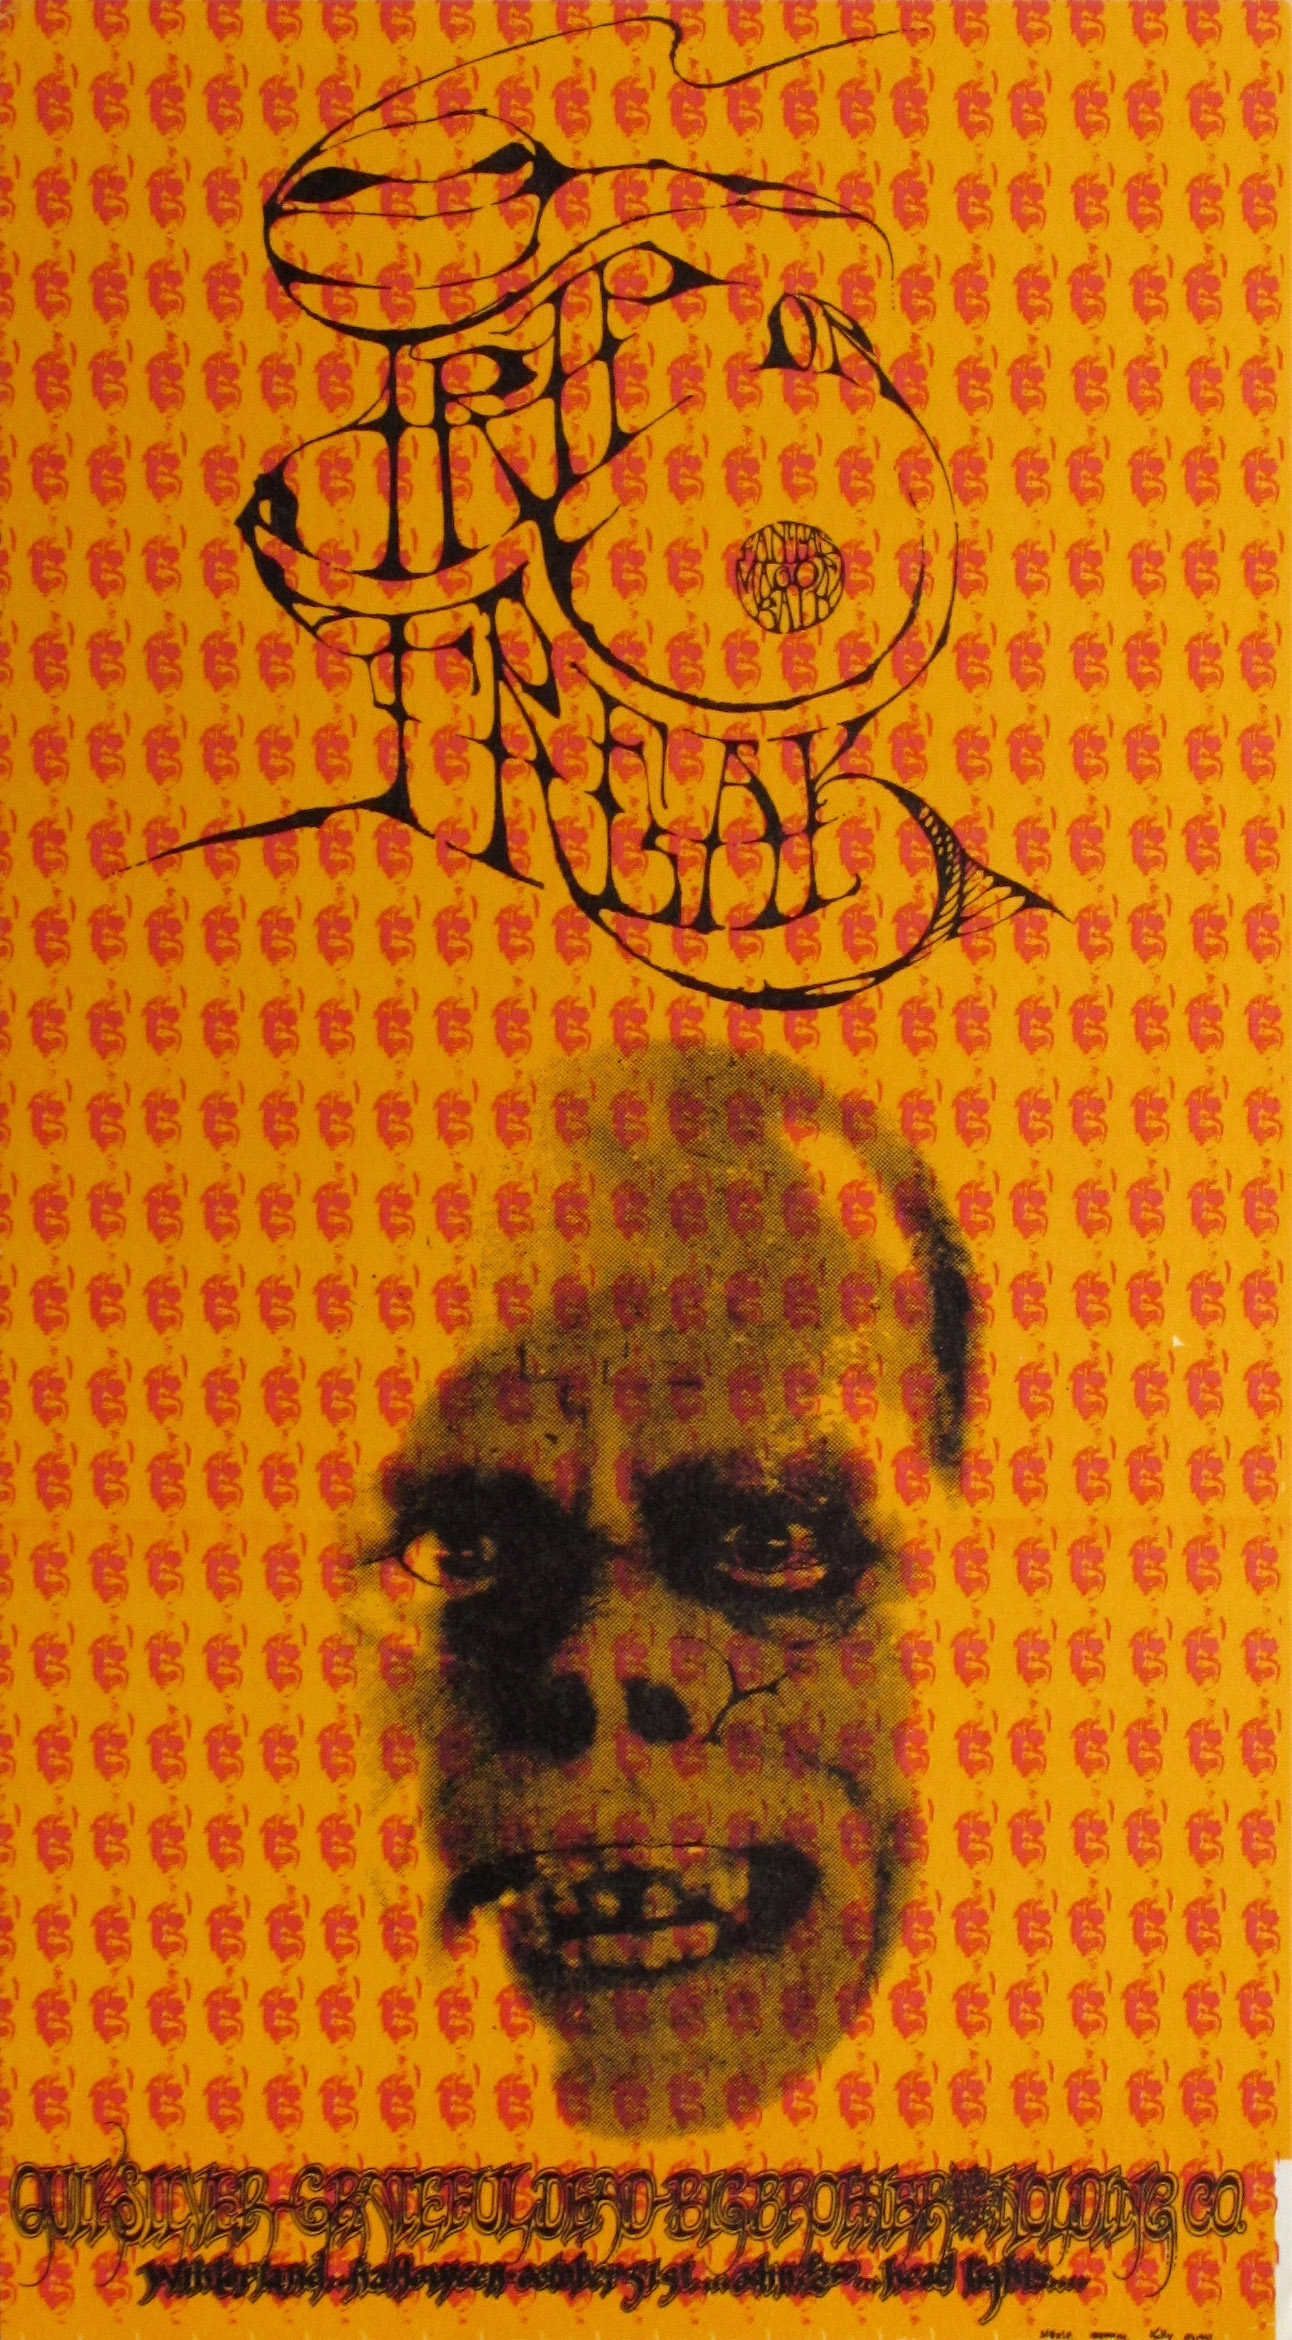 Trip Or Freak Original Concert Handbill